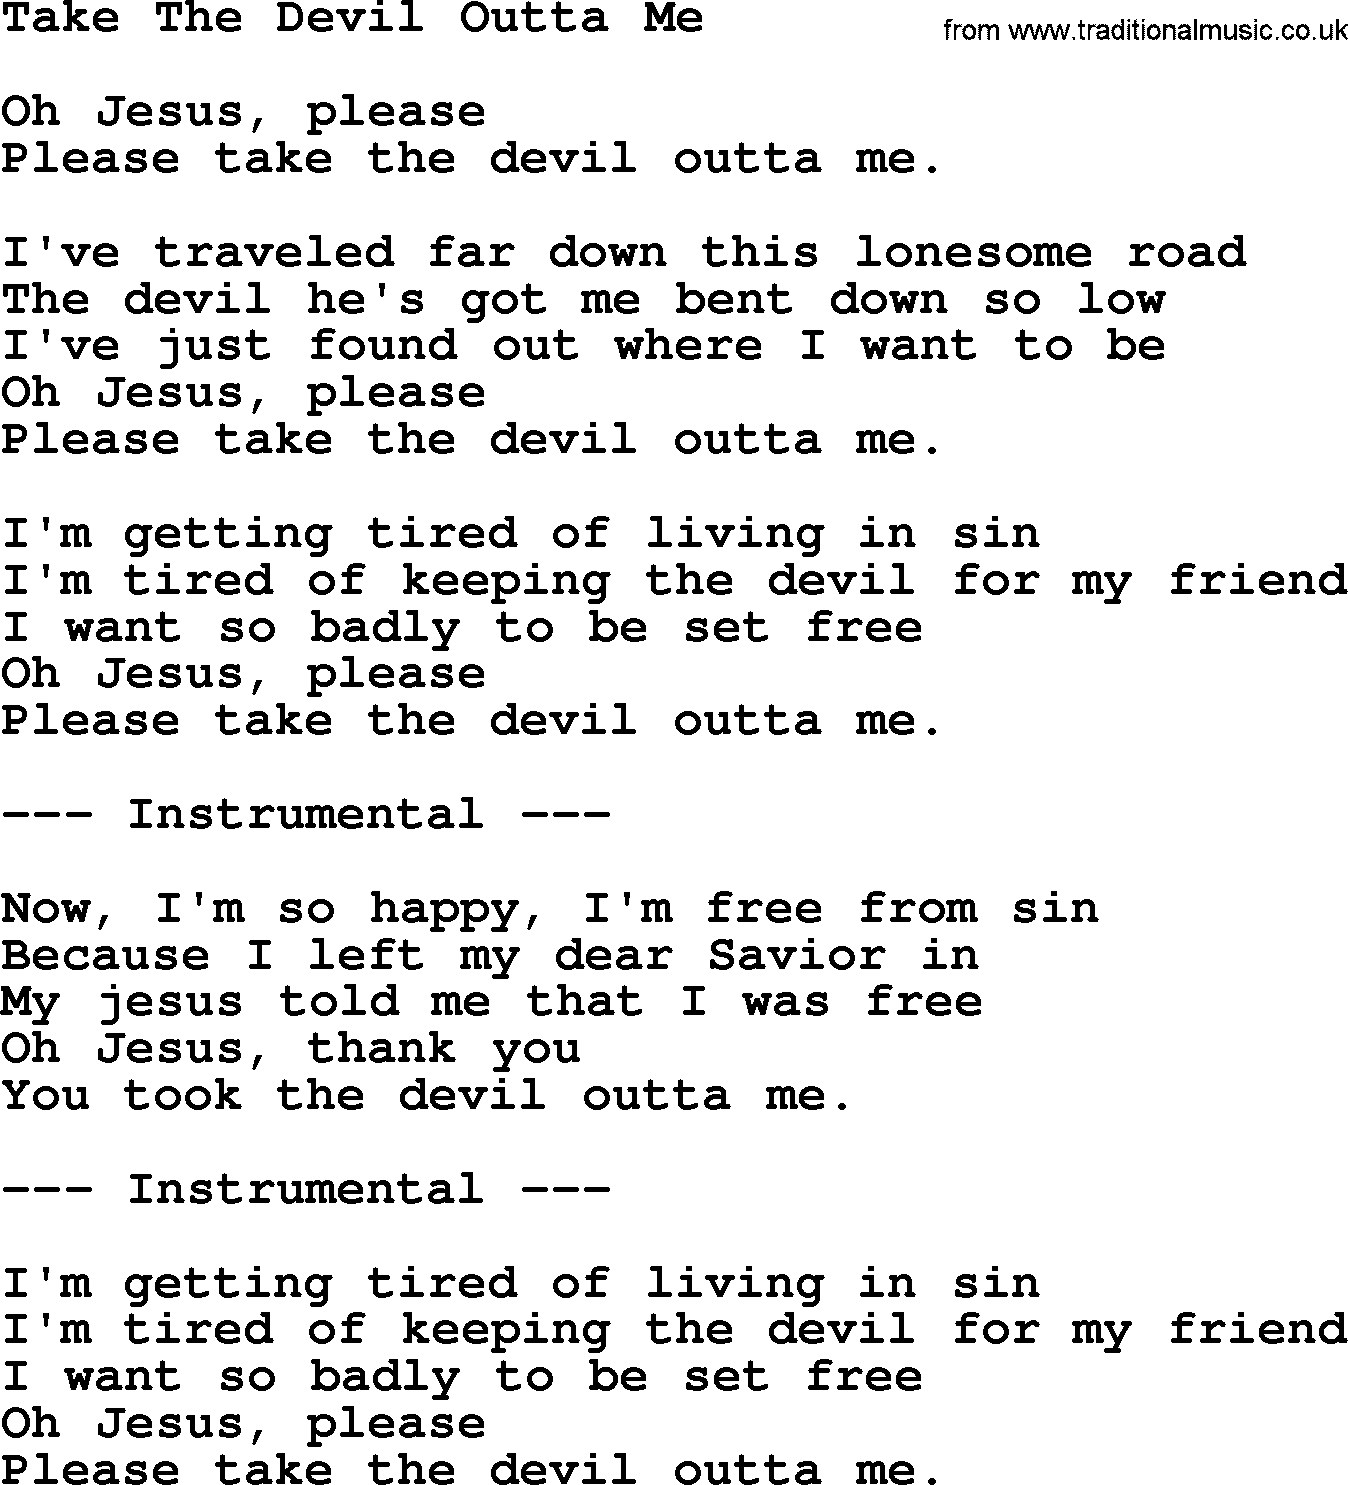 George Jones song: Take The Devil Outta Me, lyrics